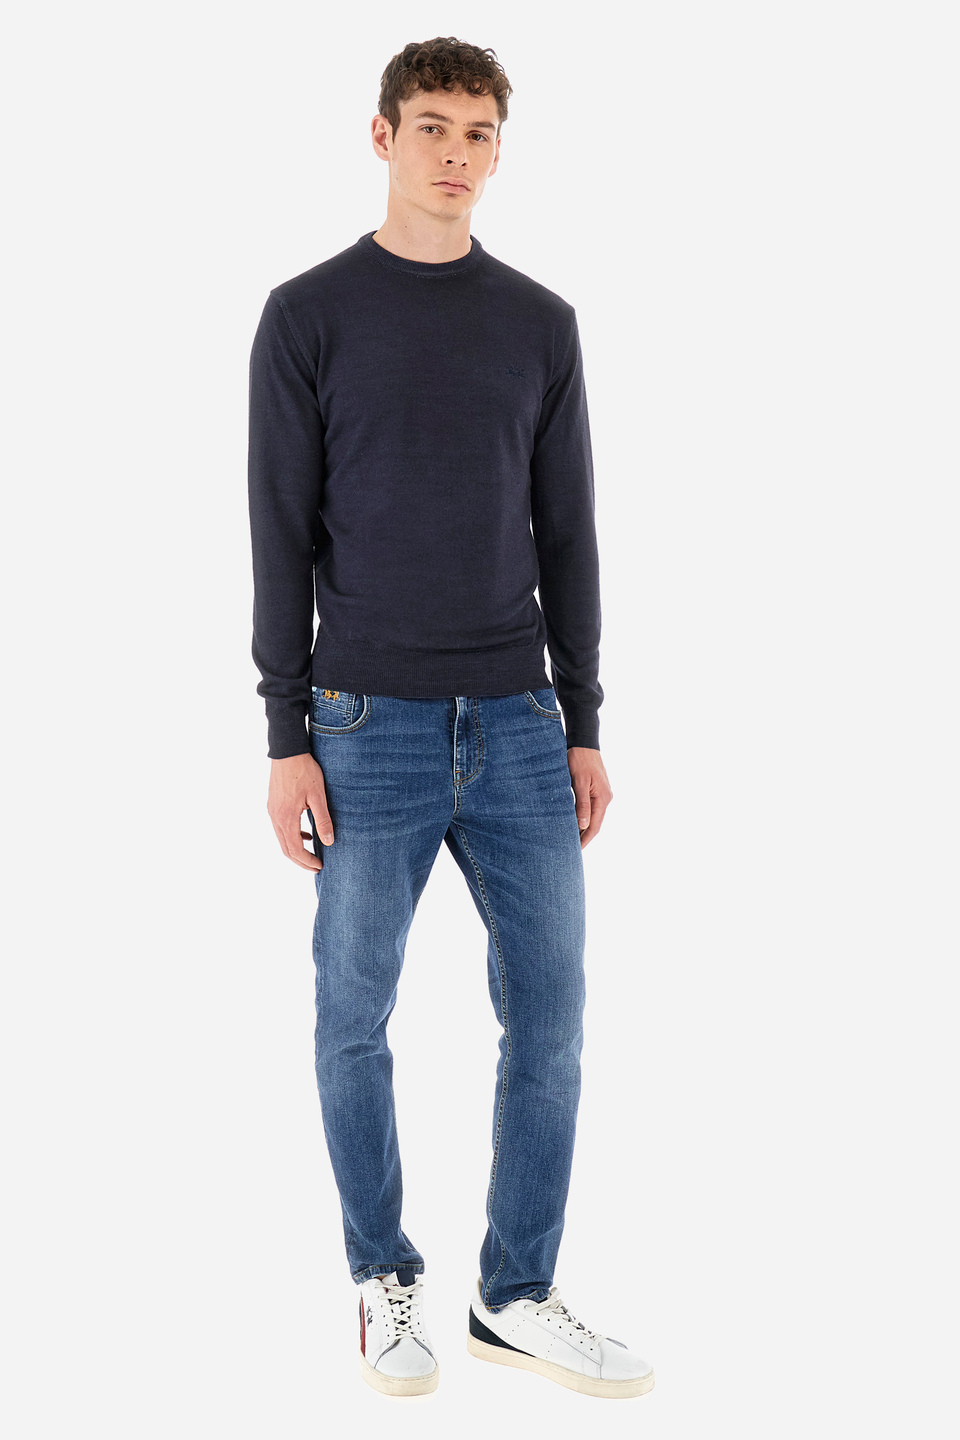 Sweater hombre de corte recto - Wonder | La Martina - Official Online Shop